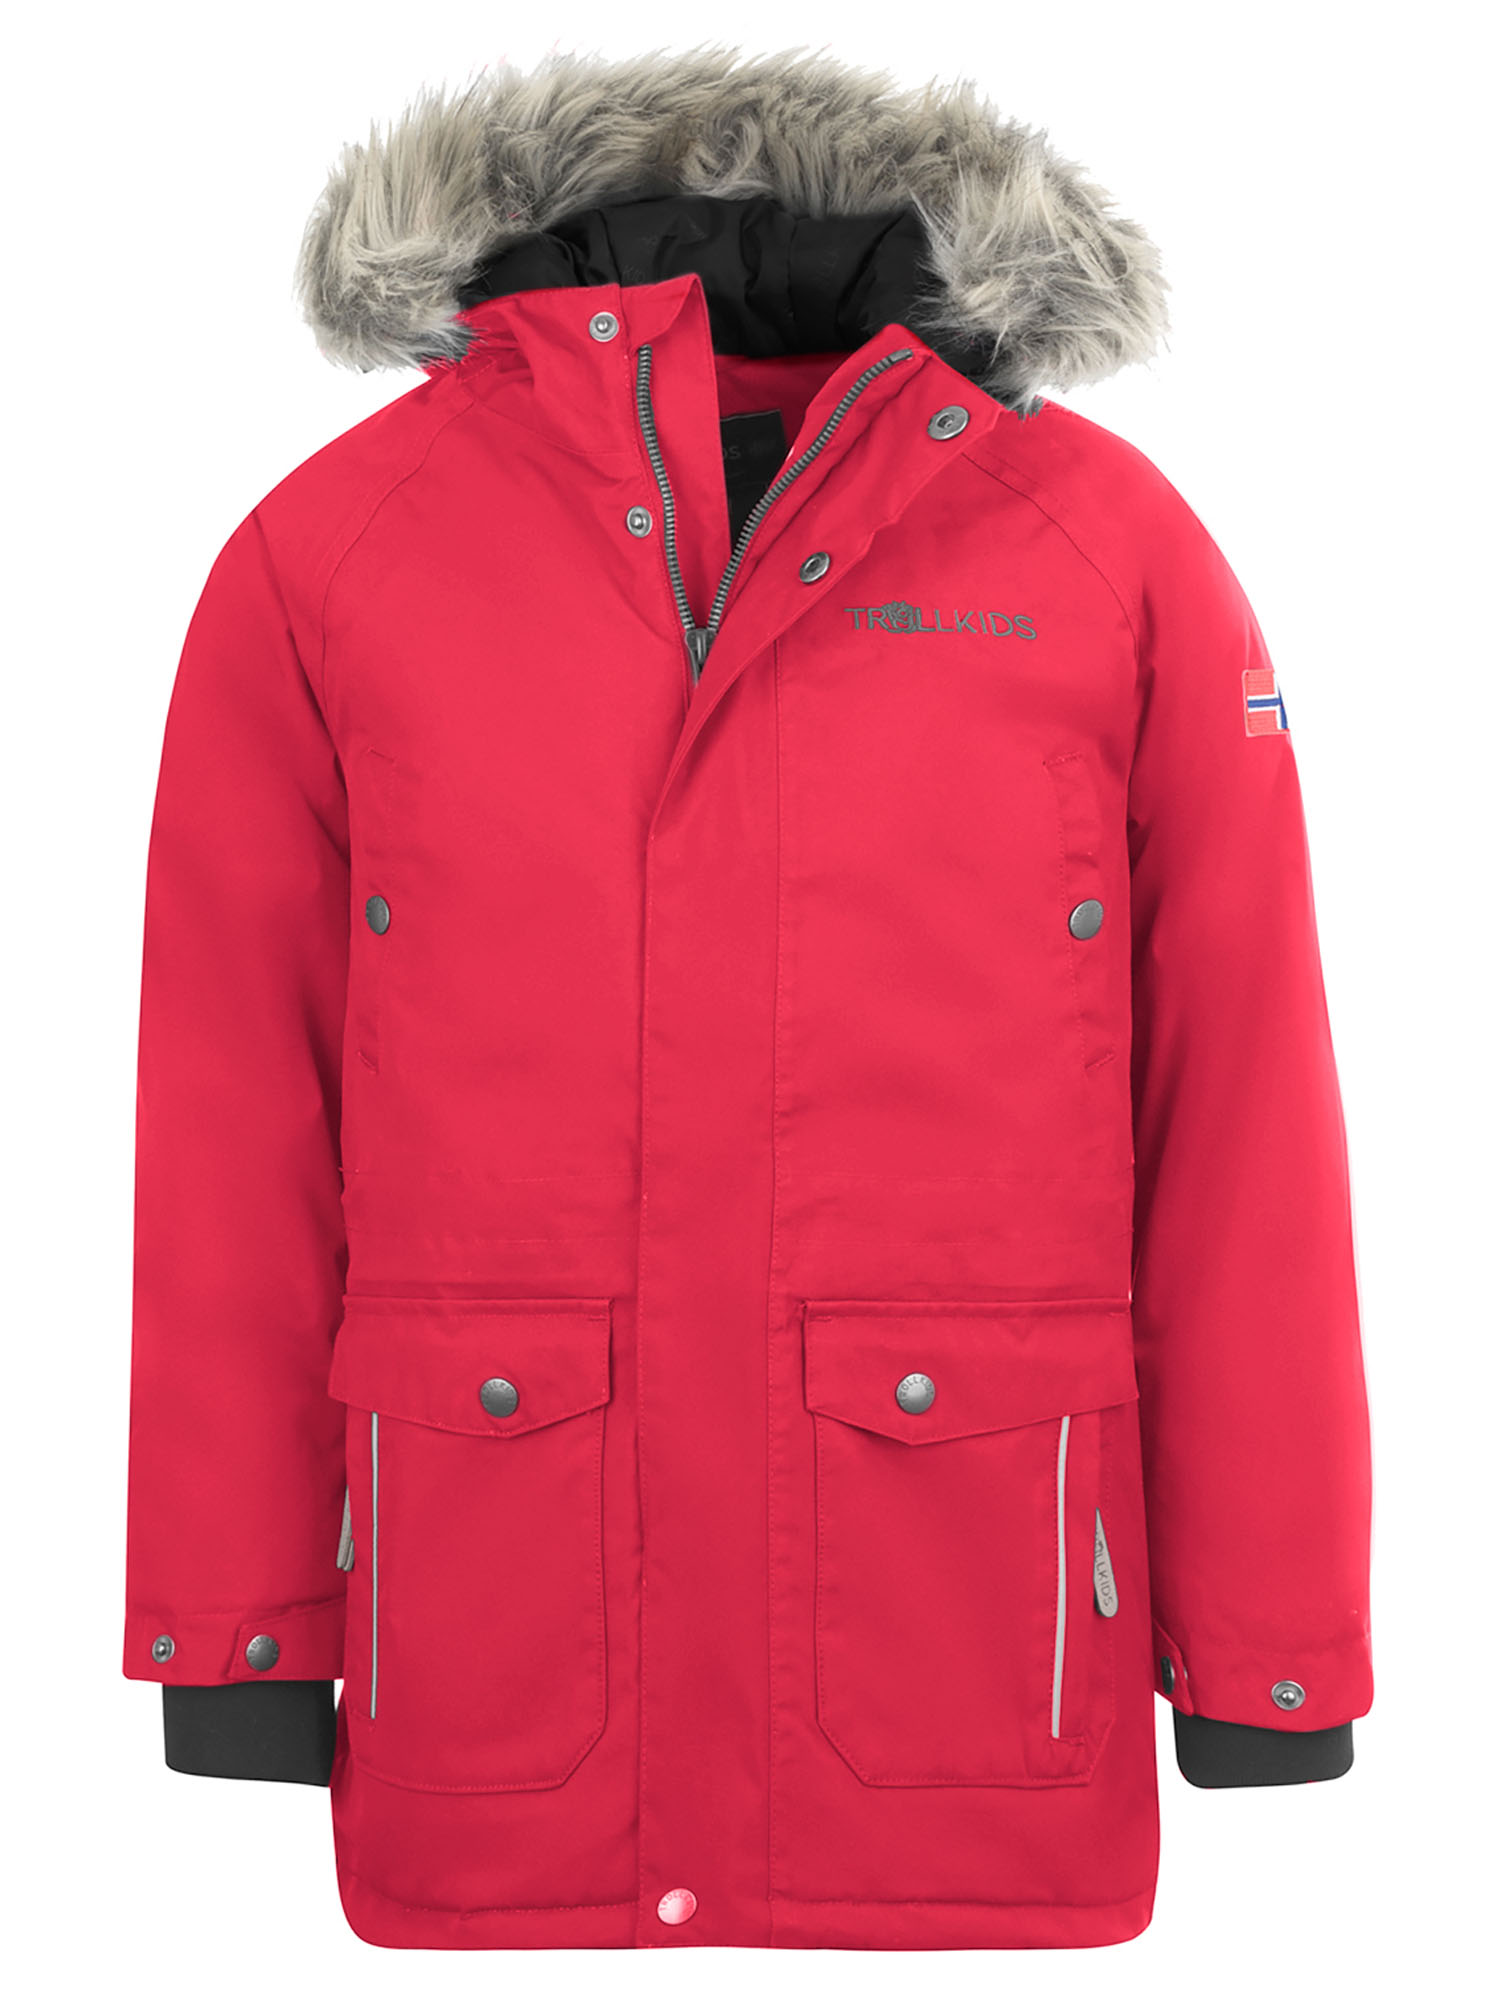 Куртка Детская Trollkids Nordkapp Bright Red (Рост:164) куртка детская roxy snowy tale snow jacket girl s bright white naive rg р 98